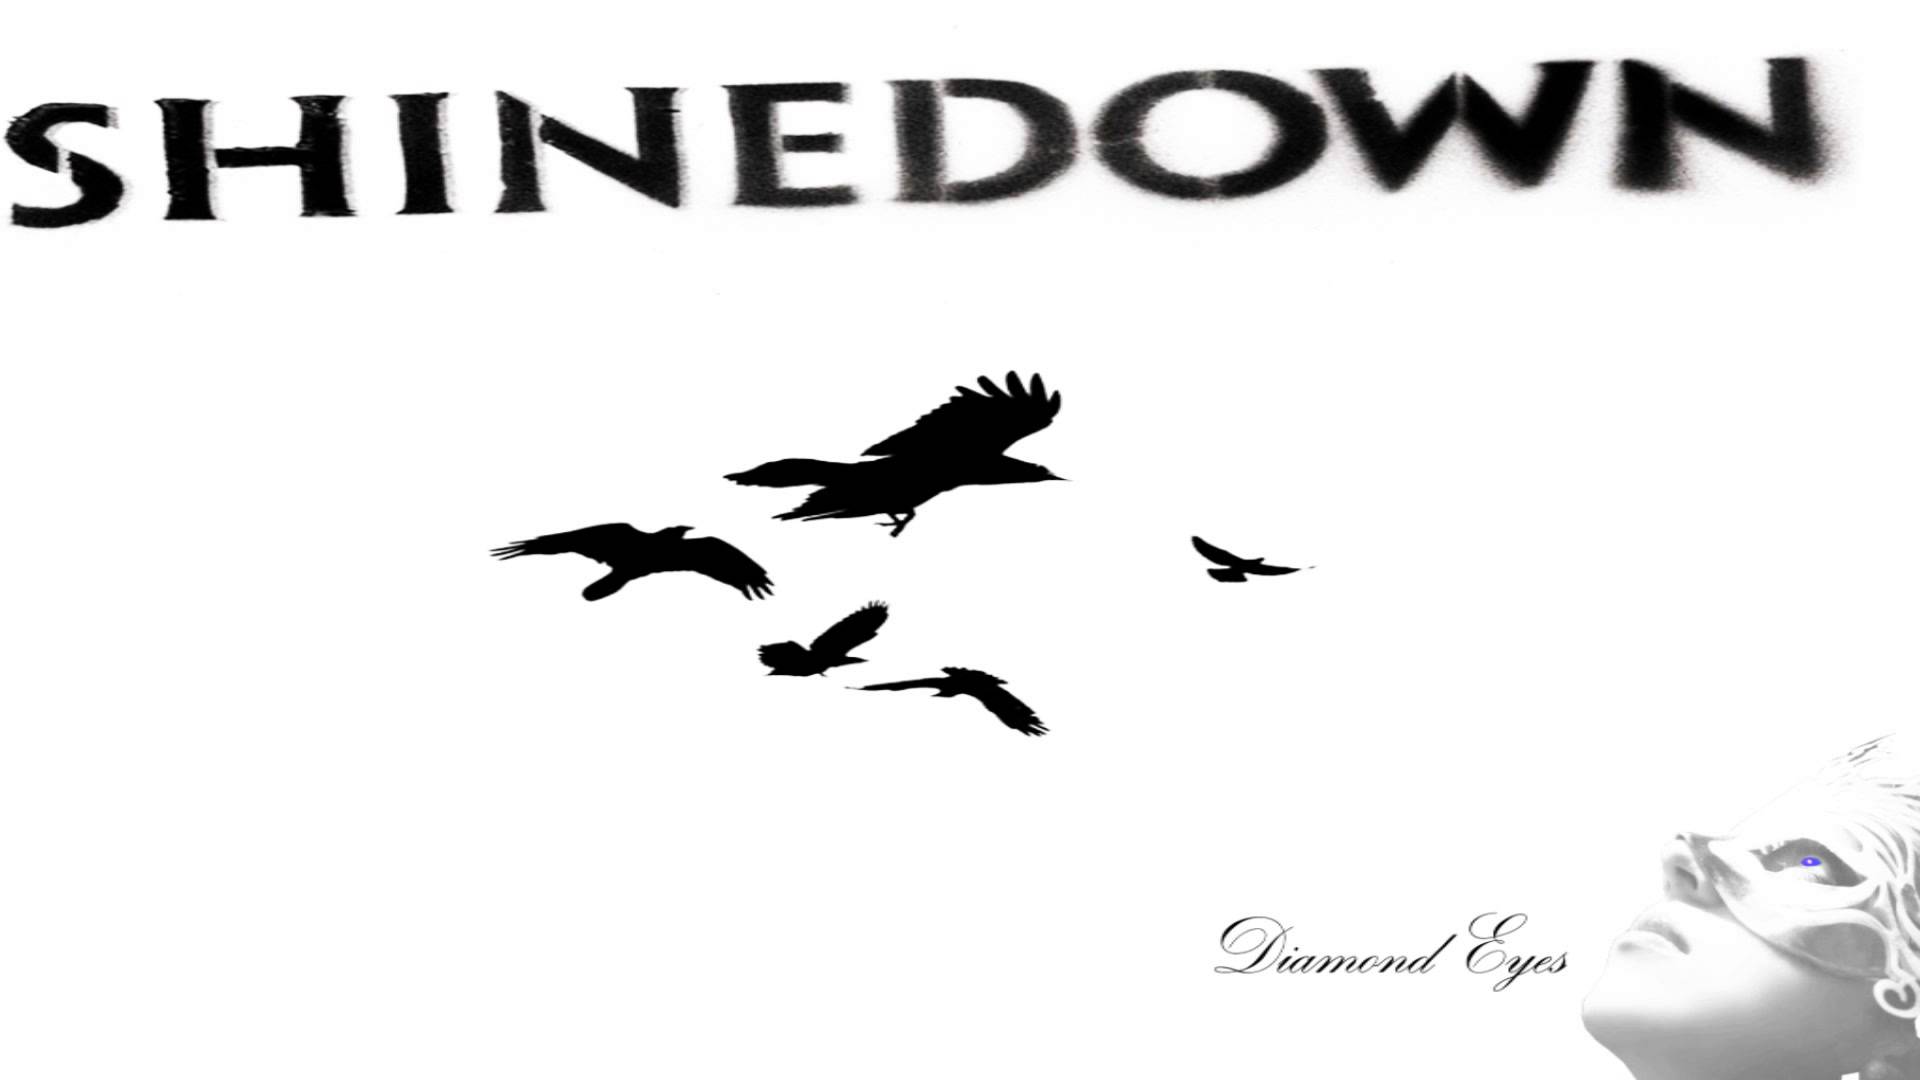 Shinedown - Diamond Eyes Boom Lay Boom Lay Boom - YouTube